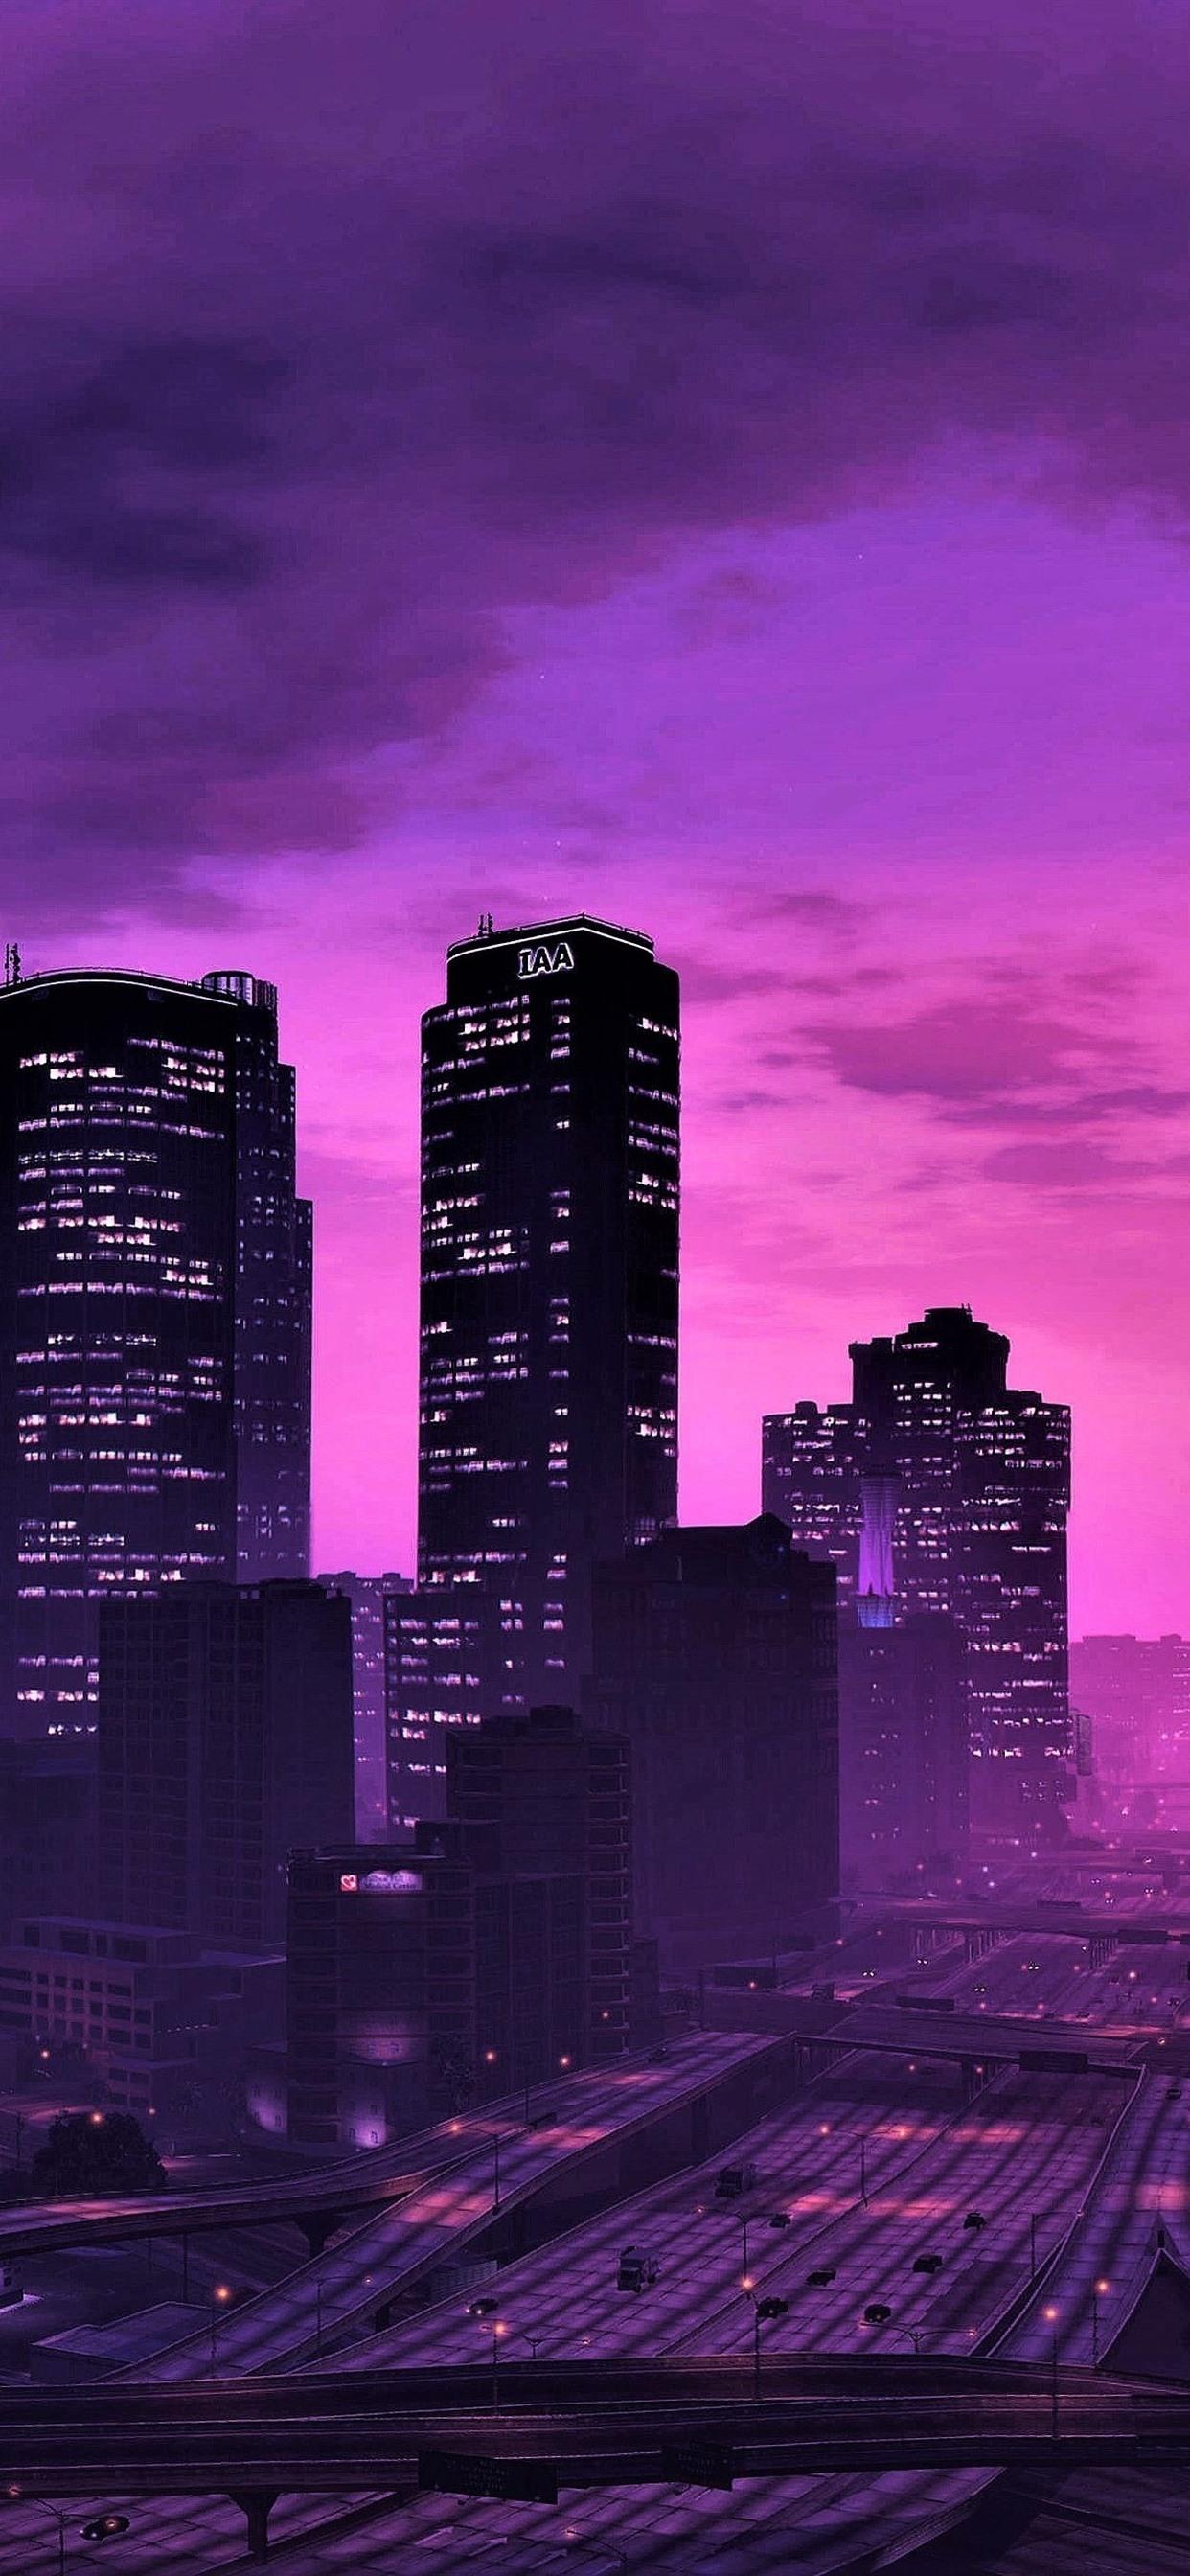 GTA city at night, purple style, skyscrapers 1242x2688